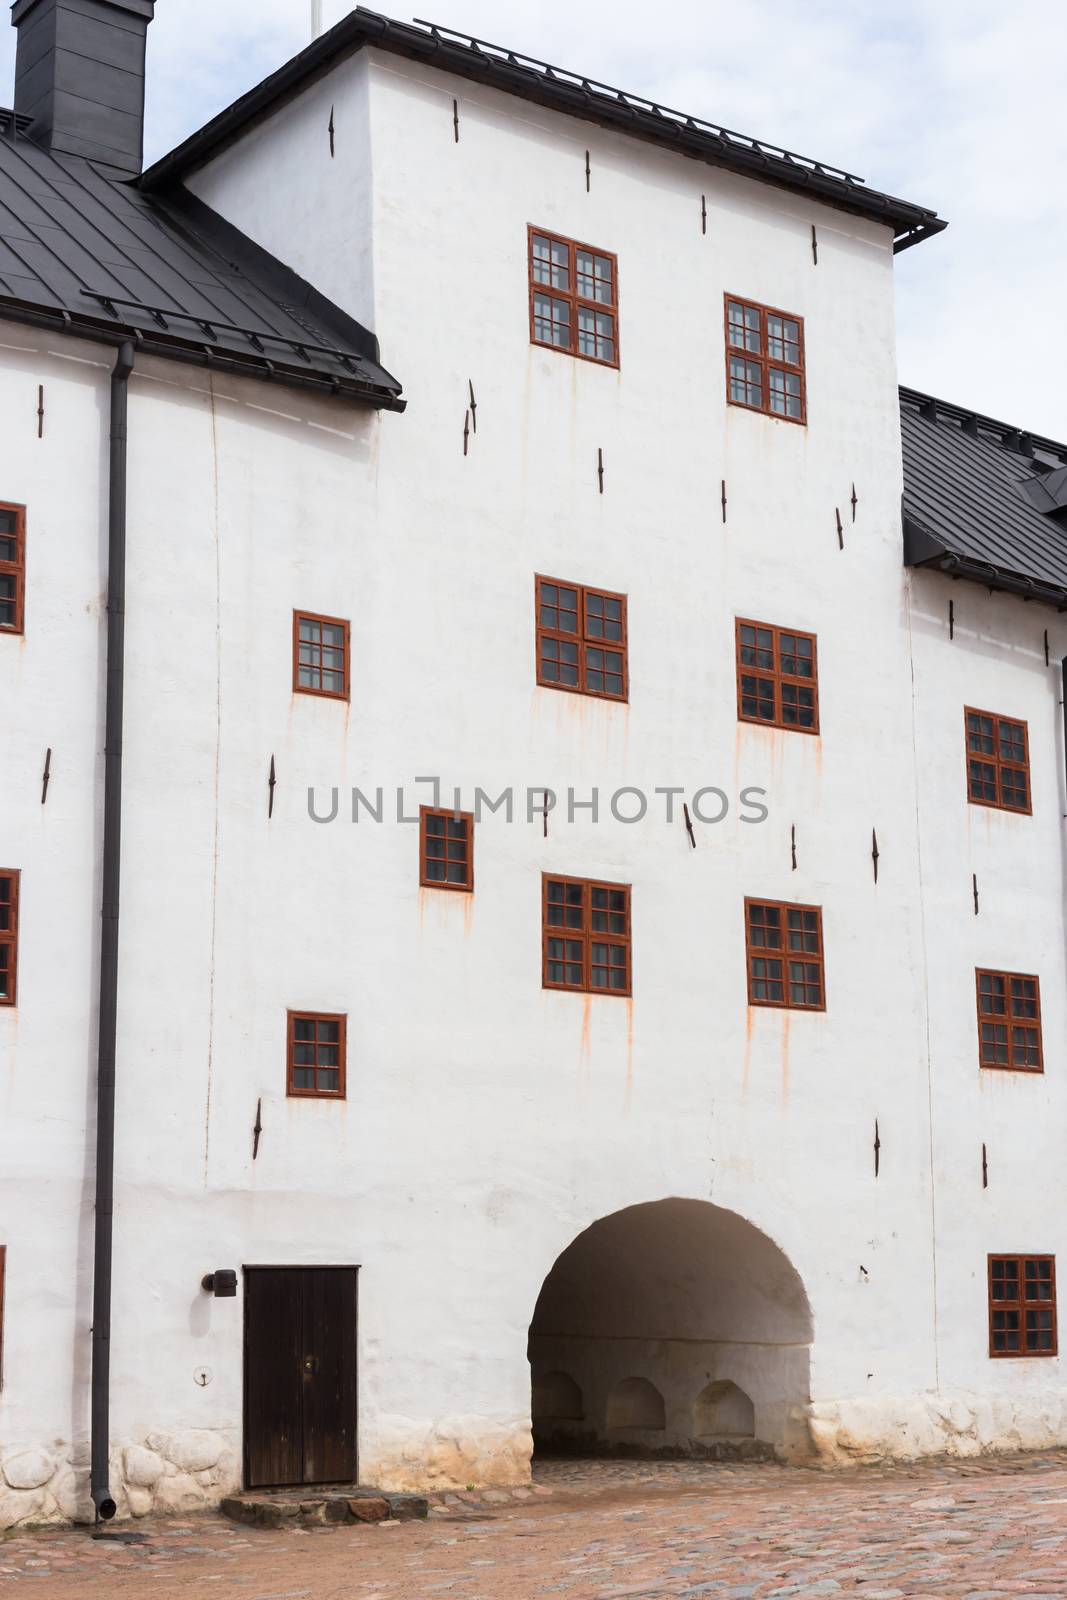 Medieval Turku Castle in Finland